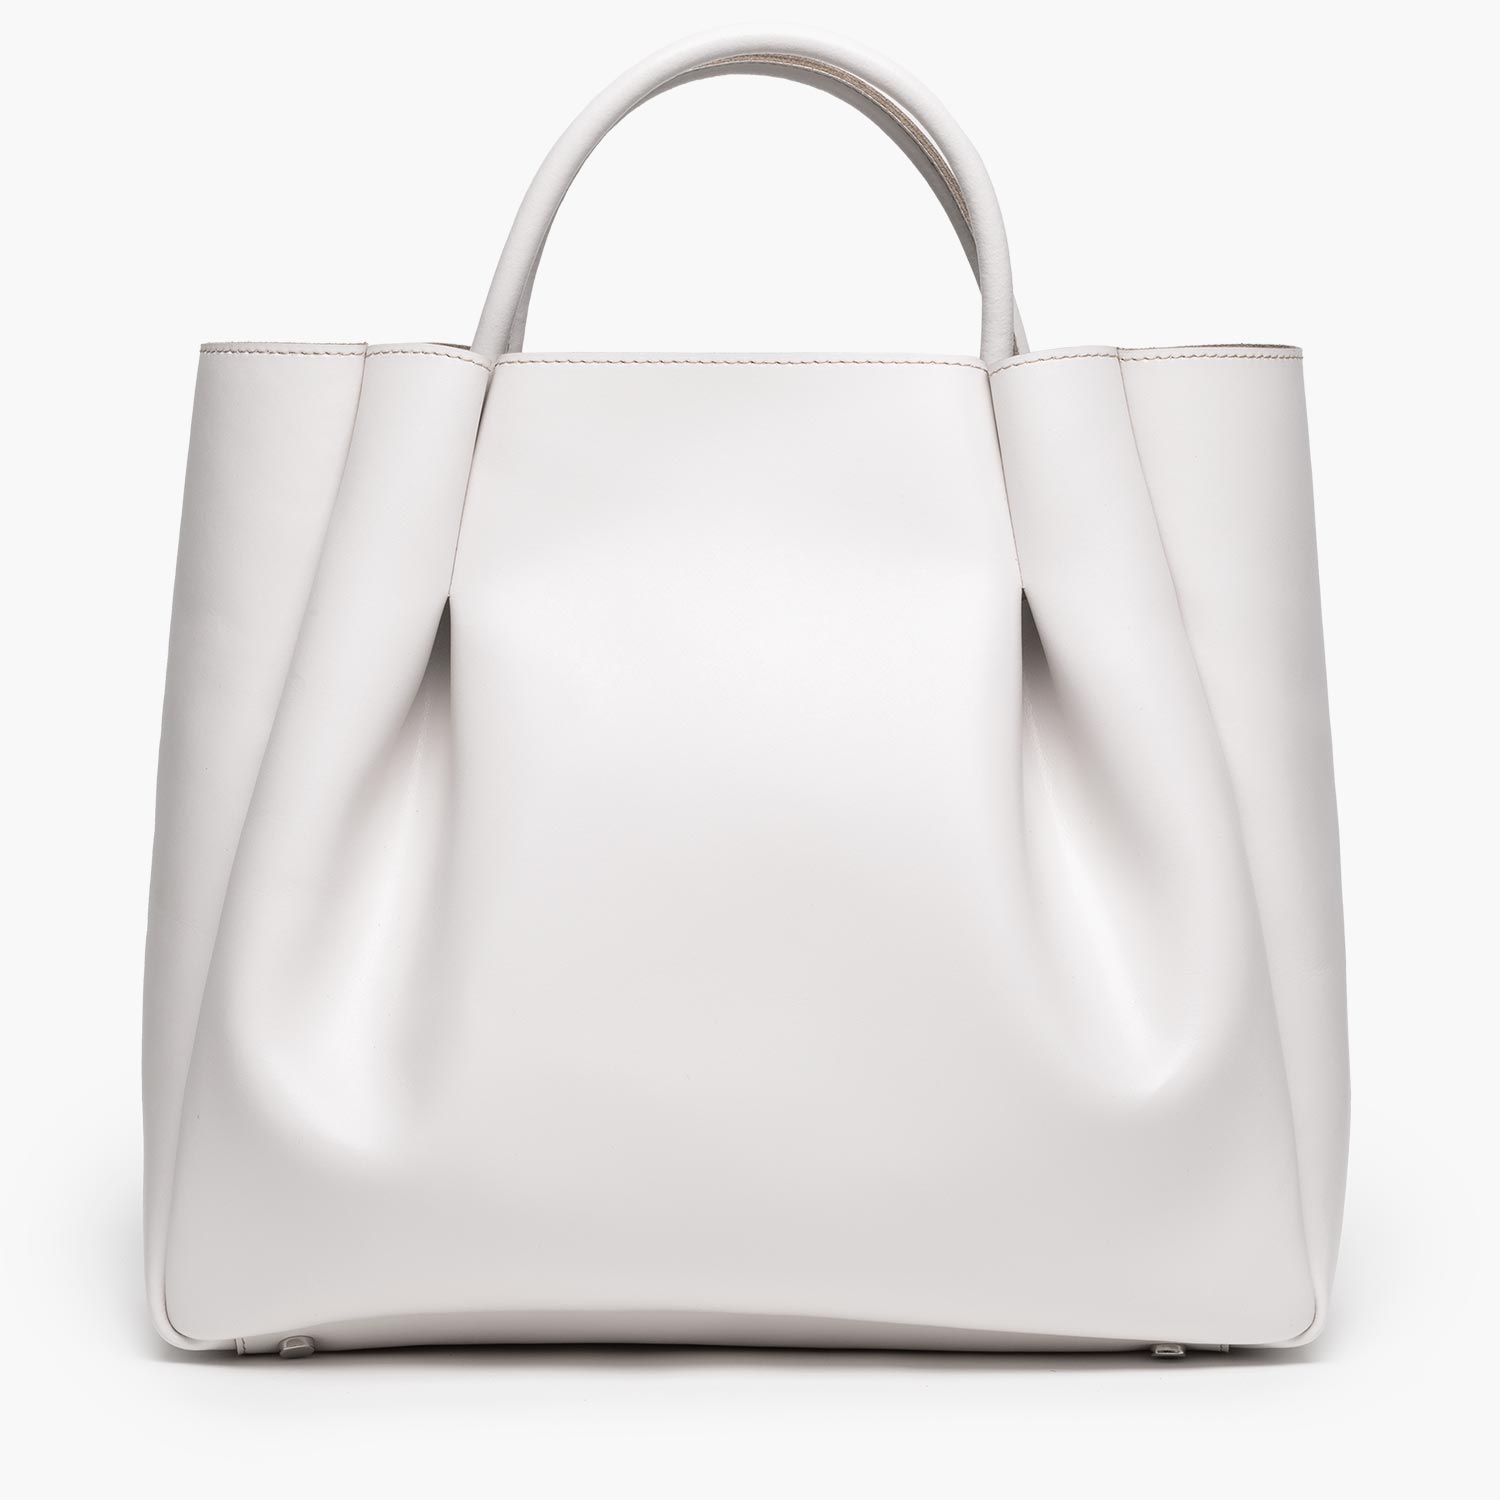 Longchamp White Leather Black Drawstring Tote Bag Purse RARE- NWOT | eBay